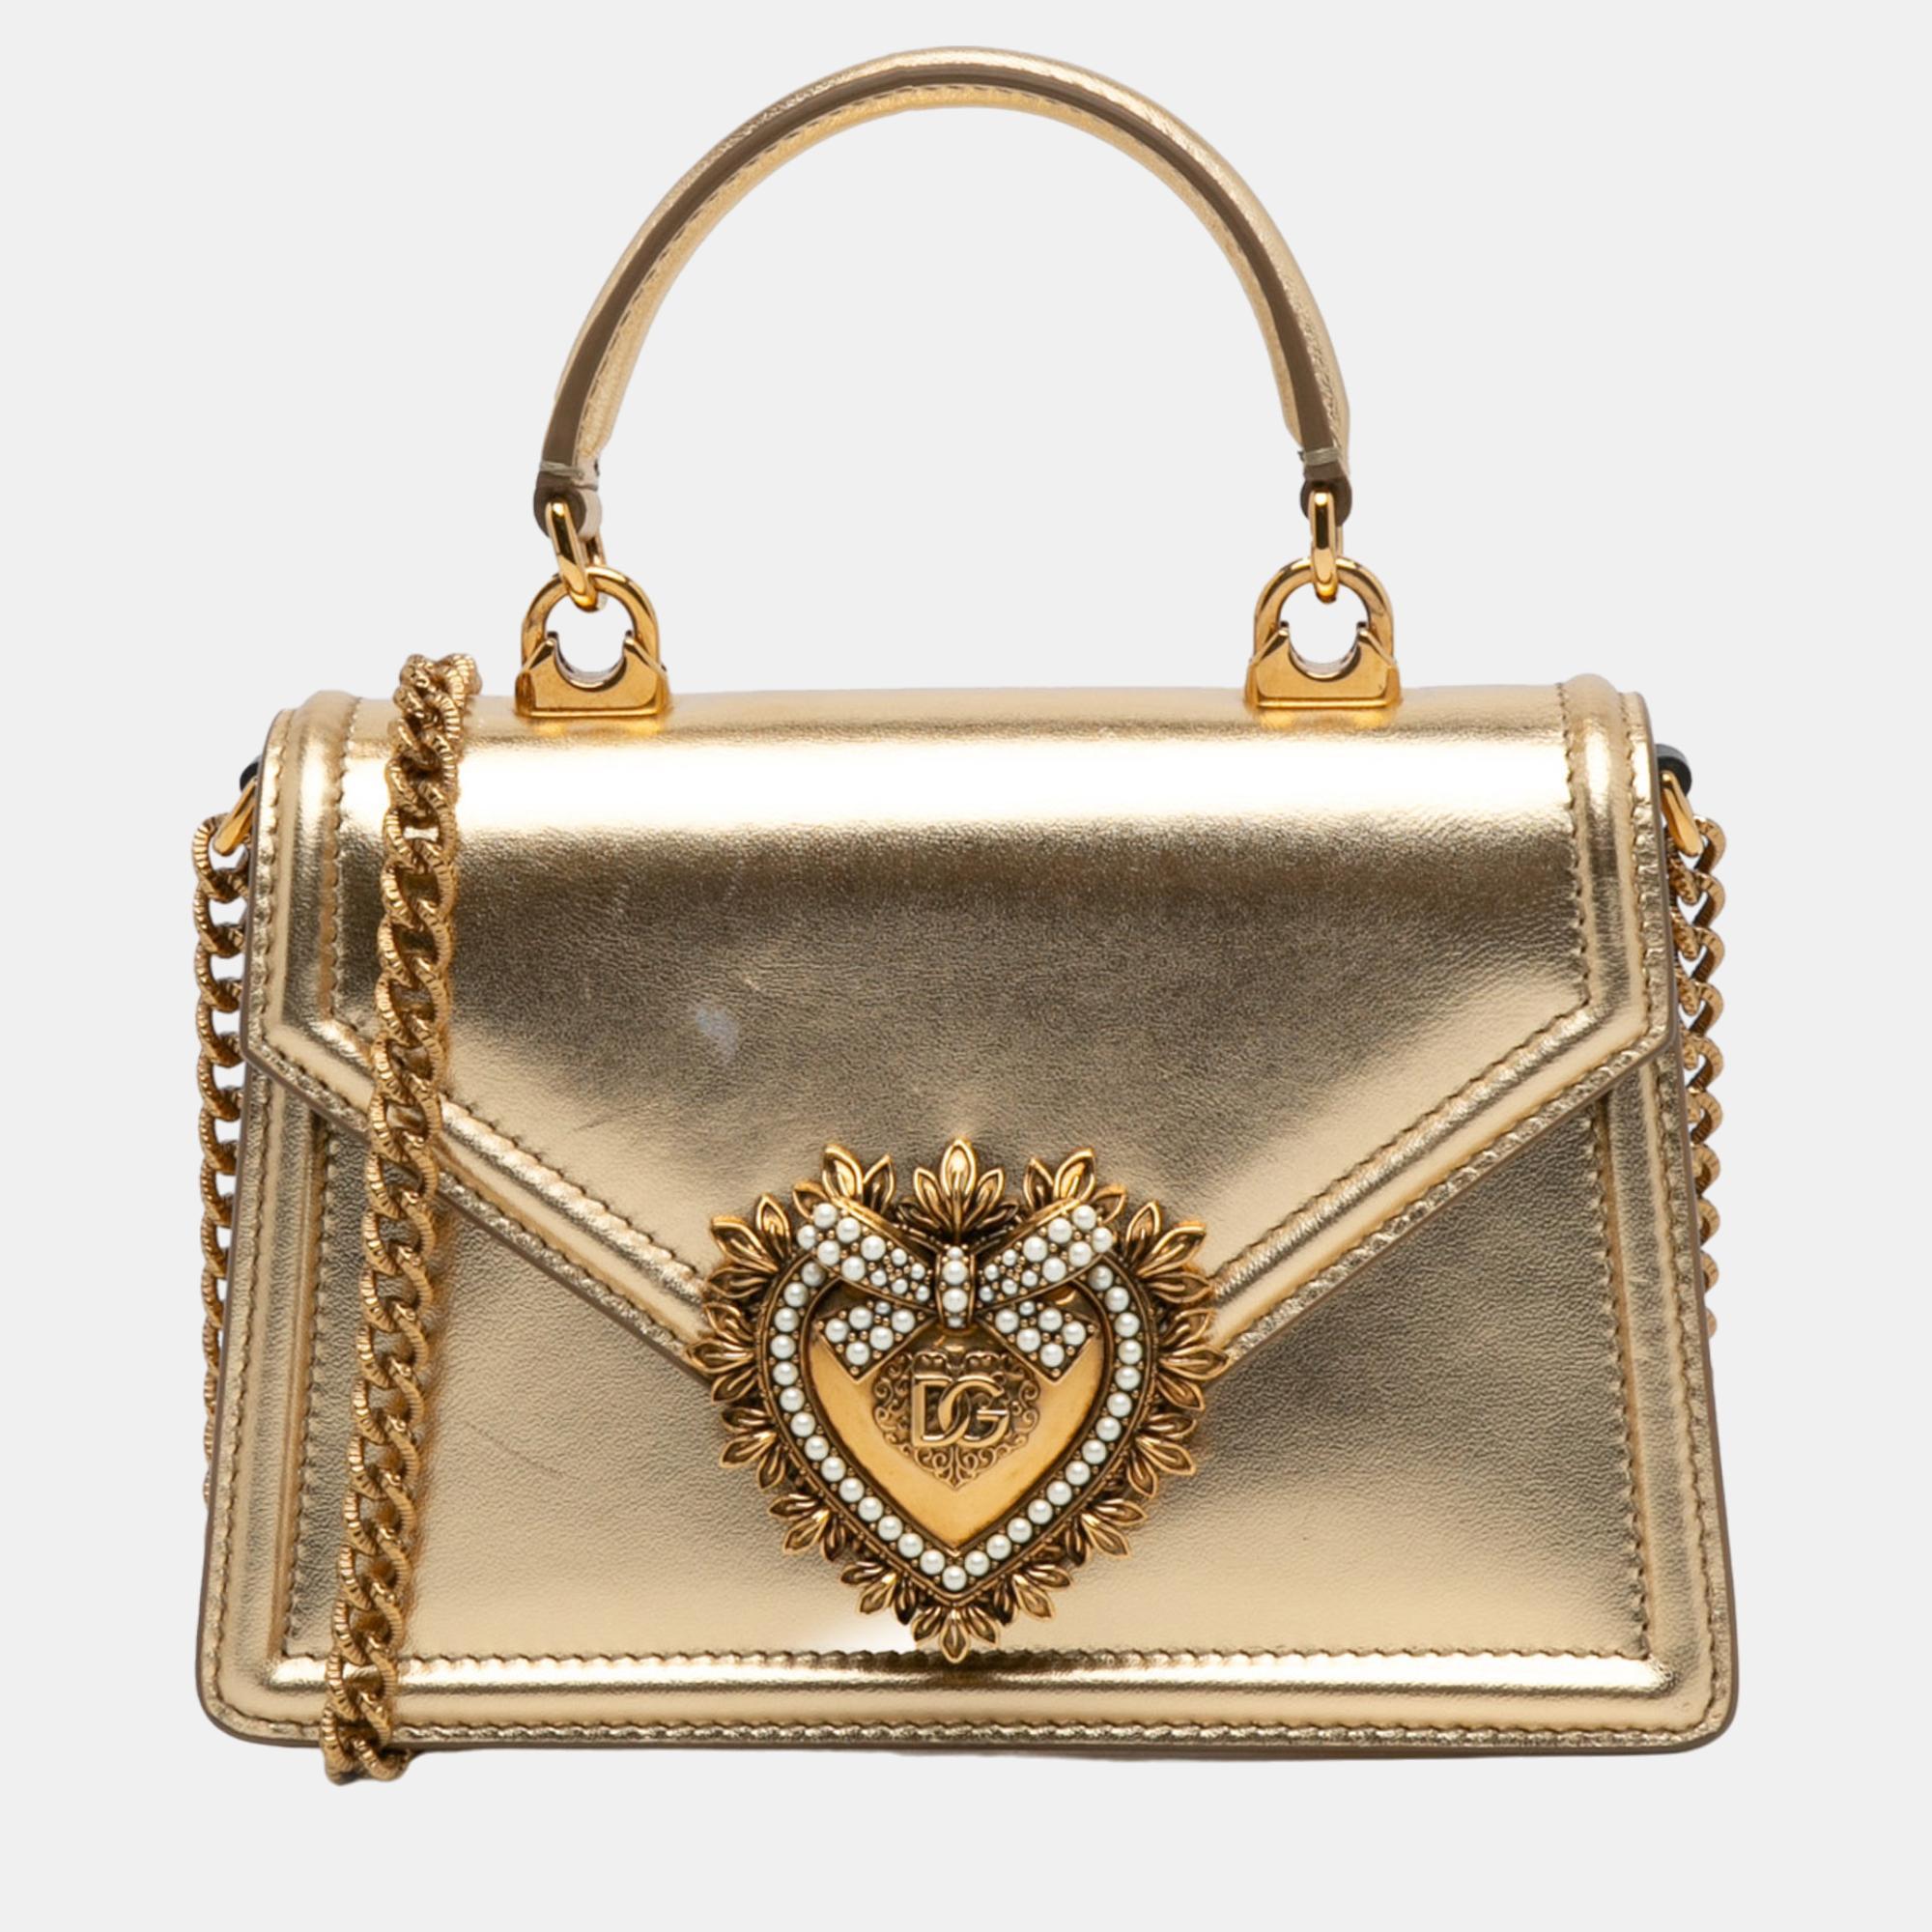 

Dolce & Gabbana Gold Devotion Bag